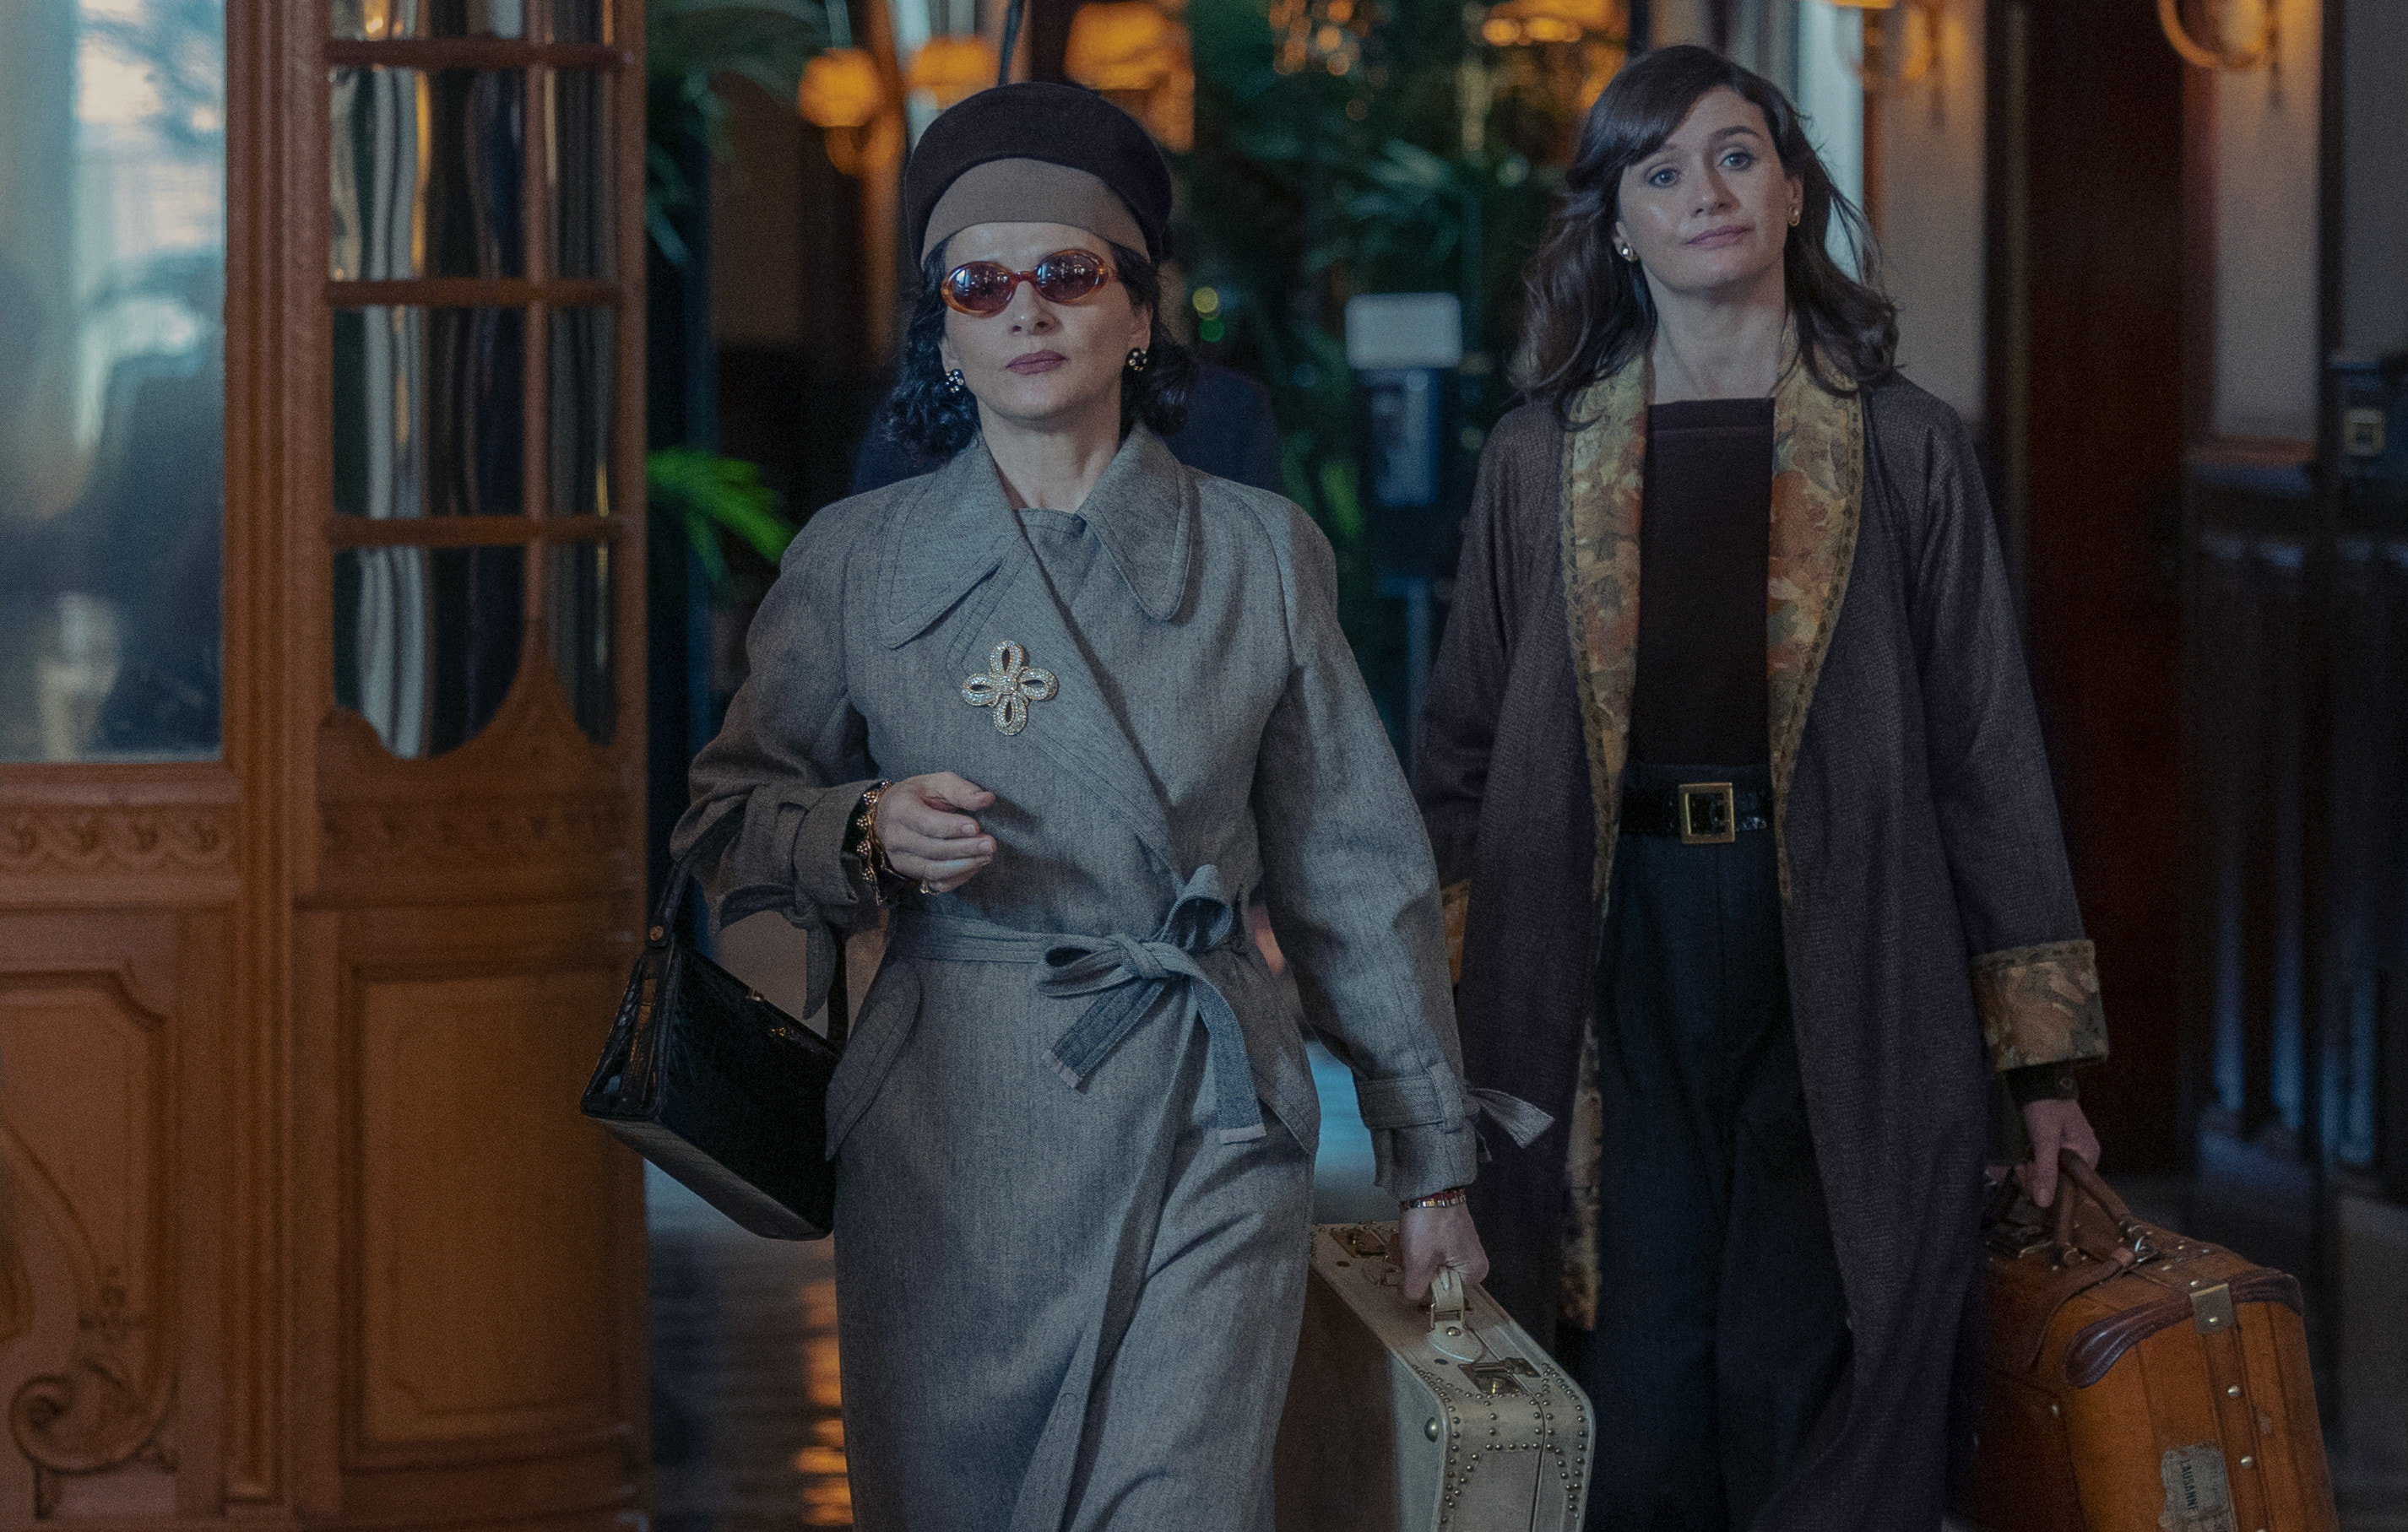 Juliette Binoche as Coco Chanel and Emily Mortimer as Elsa Lombardi walk into a hotel in 'The New Look' Season 1